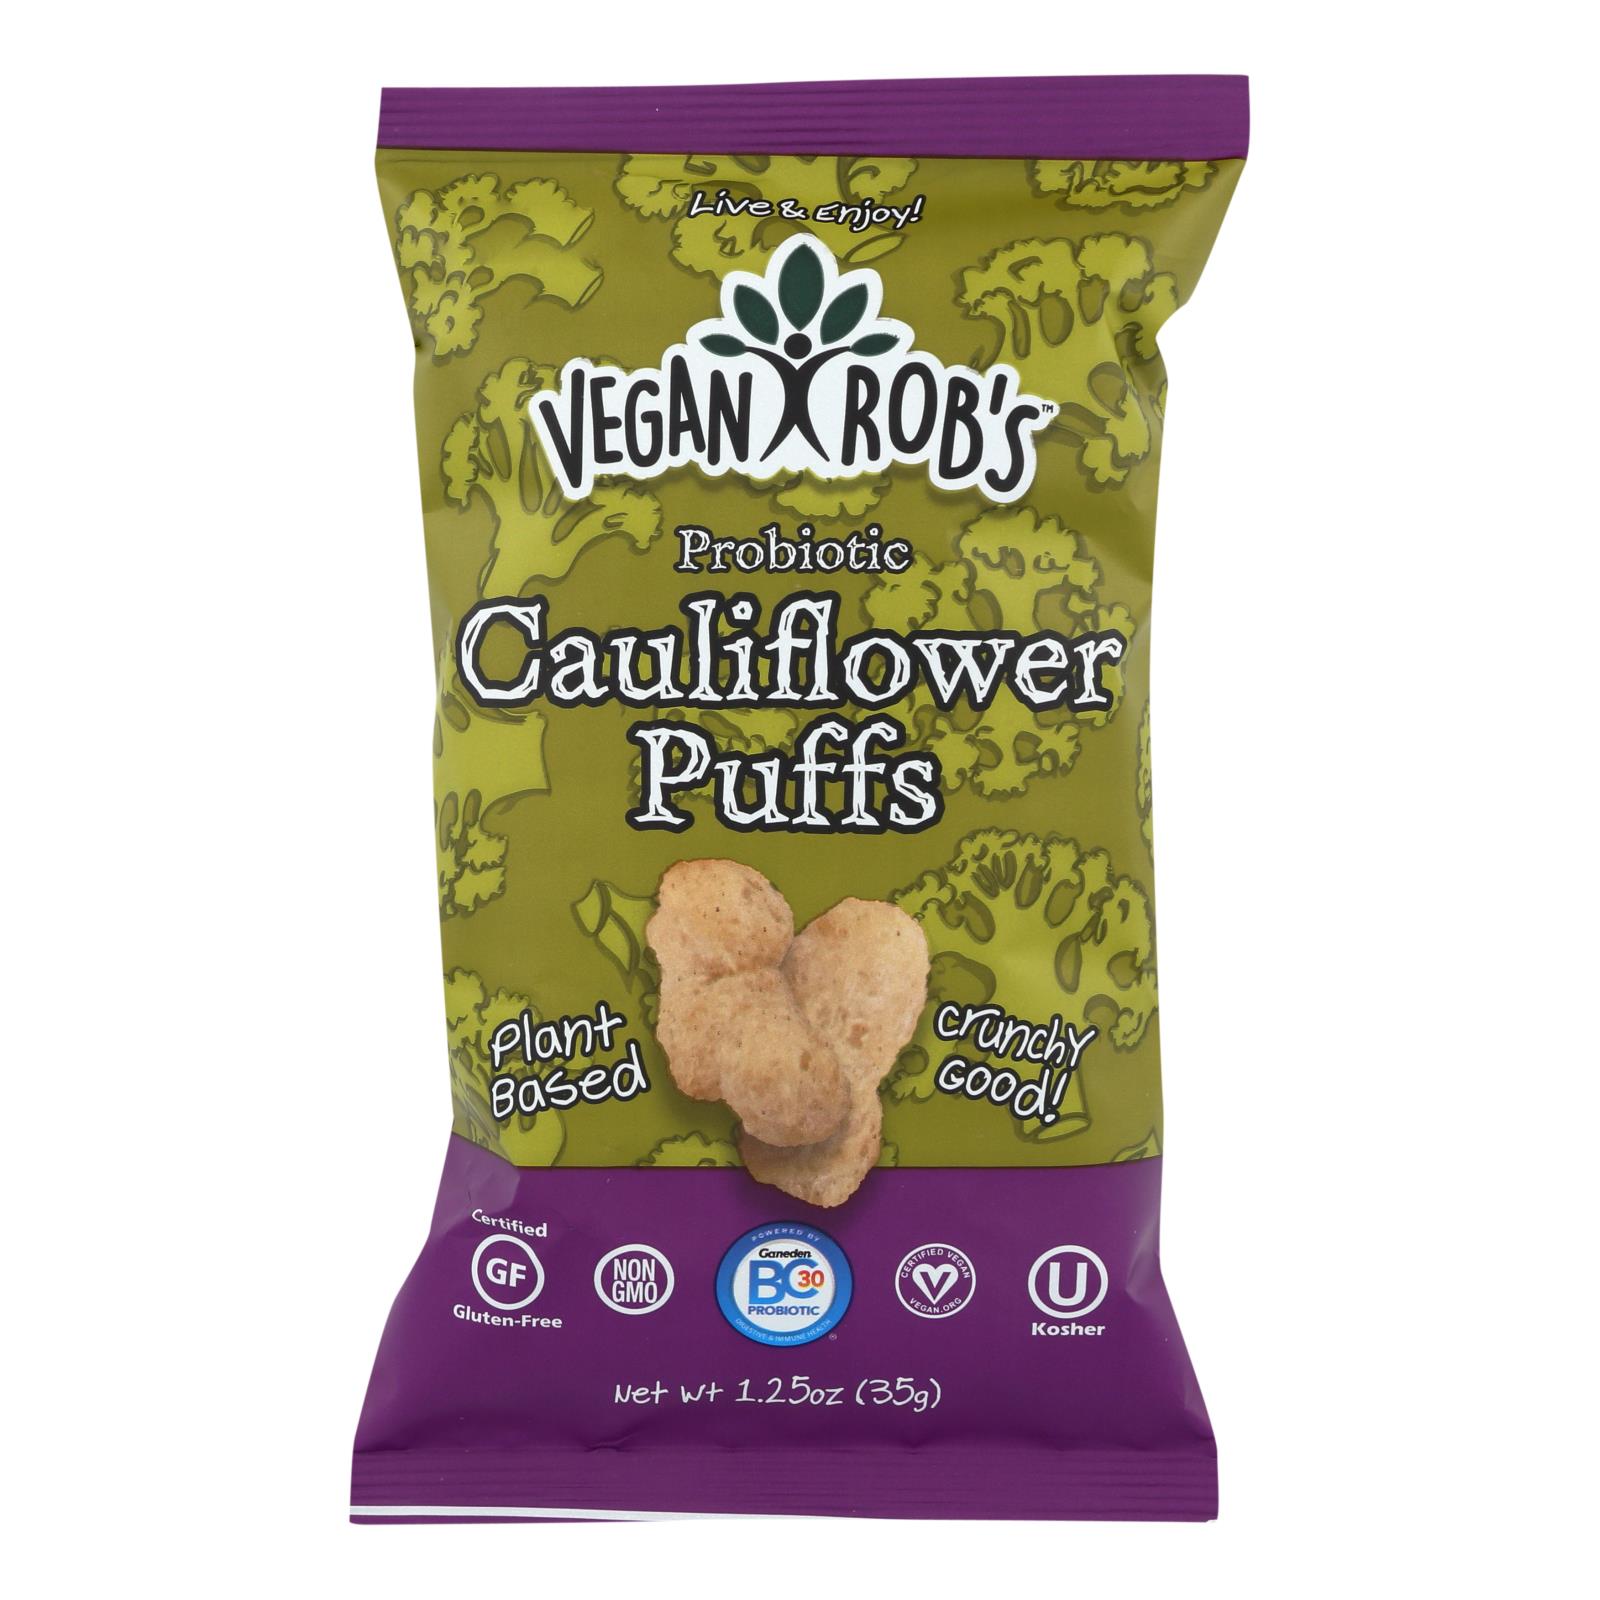 Vegan Rob's - Puffs Cauliflower Probtc - 24개 묶음상품 - 1.25 OZ